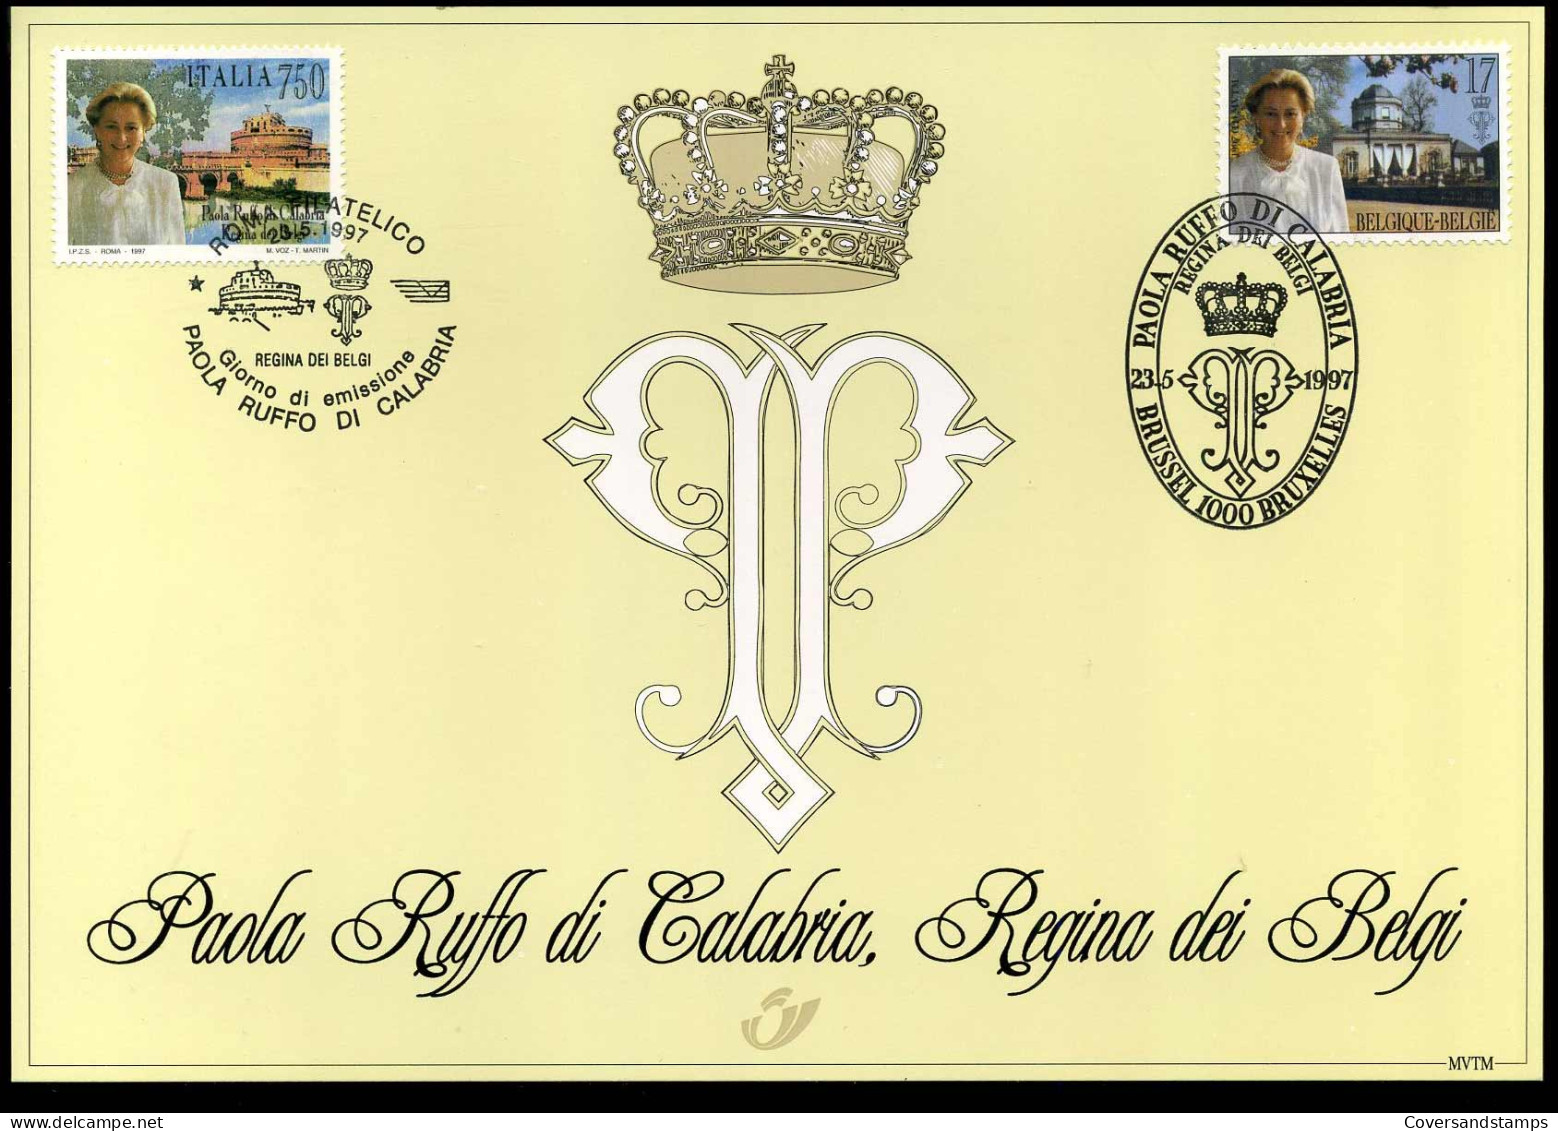 2706 HK - Paola, Gemeenschappelijke Uitgifte Met Italië - Cartoline Commemorative - Emissioni Congiunte [HK]